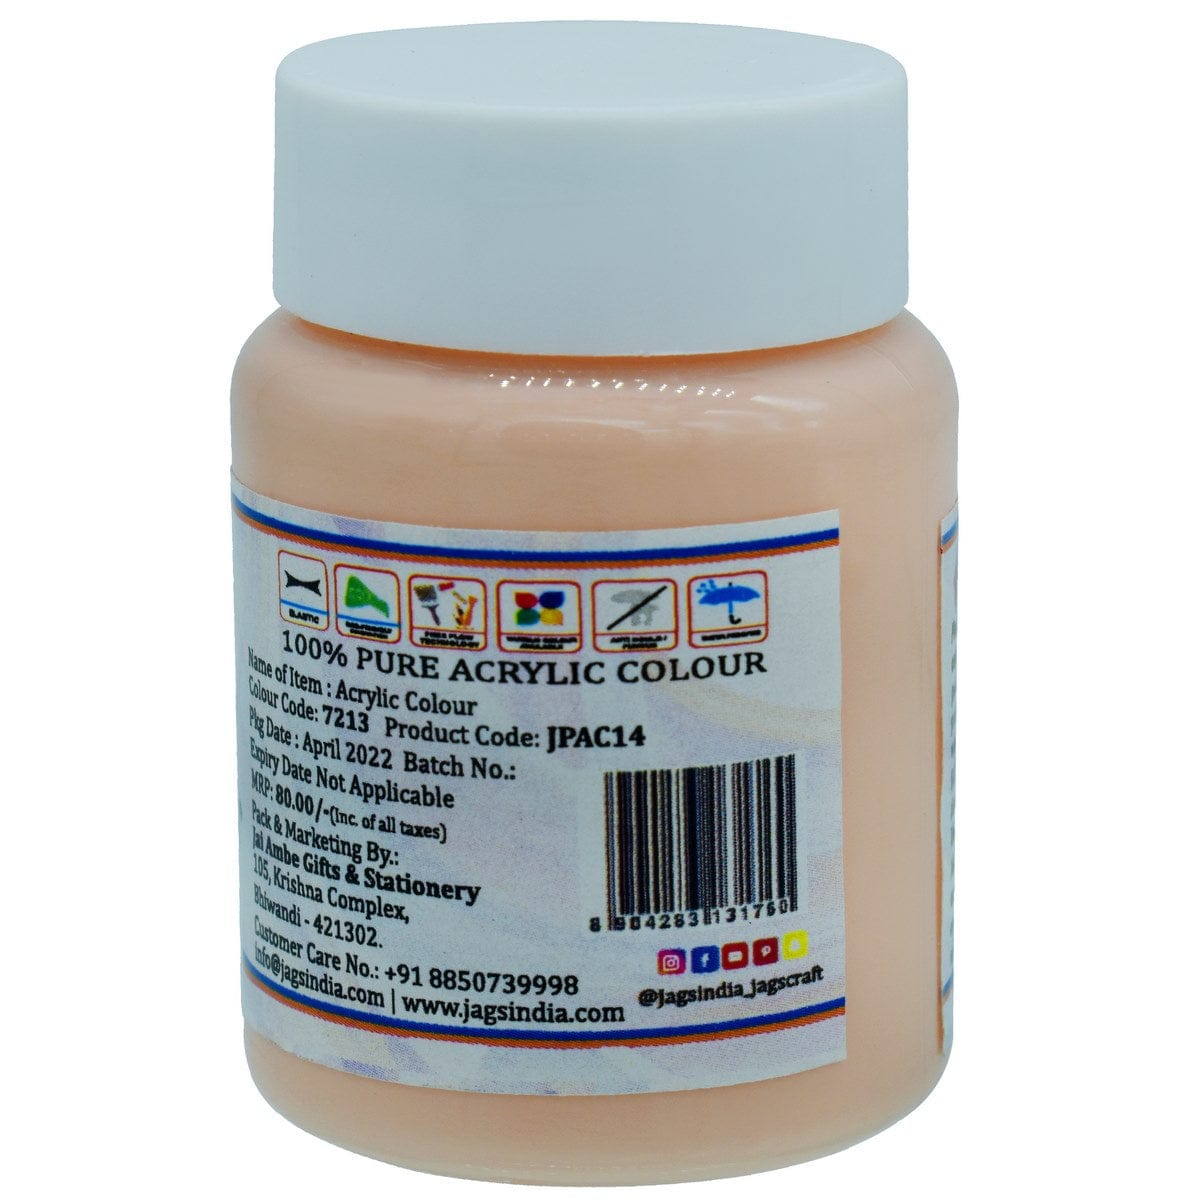 jags-mumbai Paint & Colours Jags Premium Acrylic Colour Paint Flesh Tint JPAC14